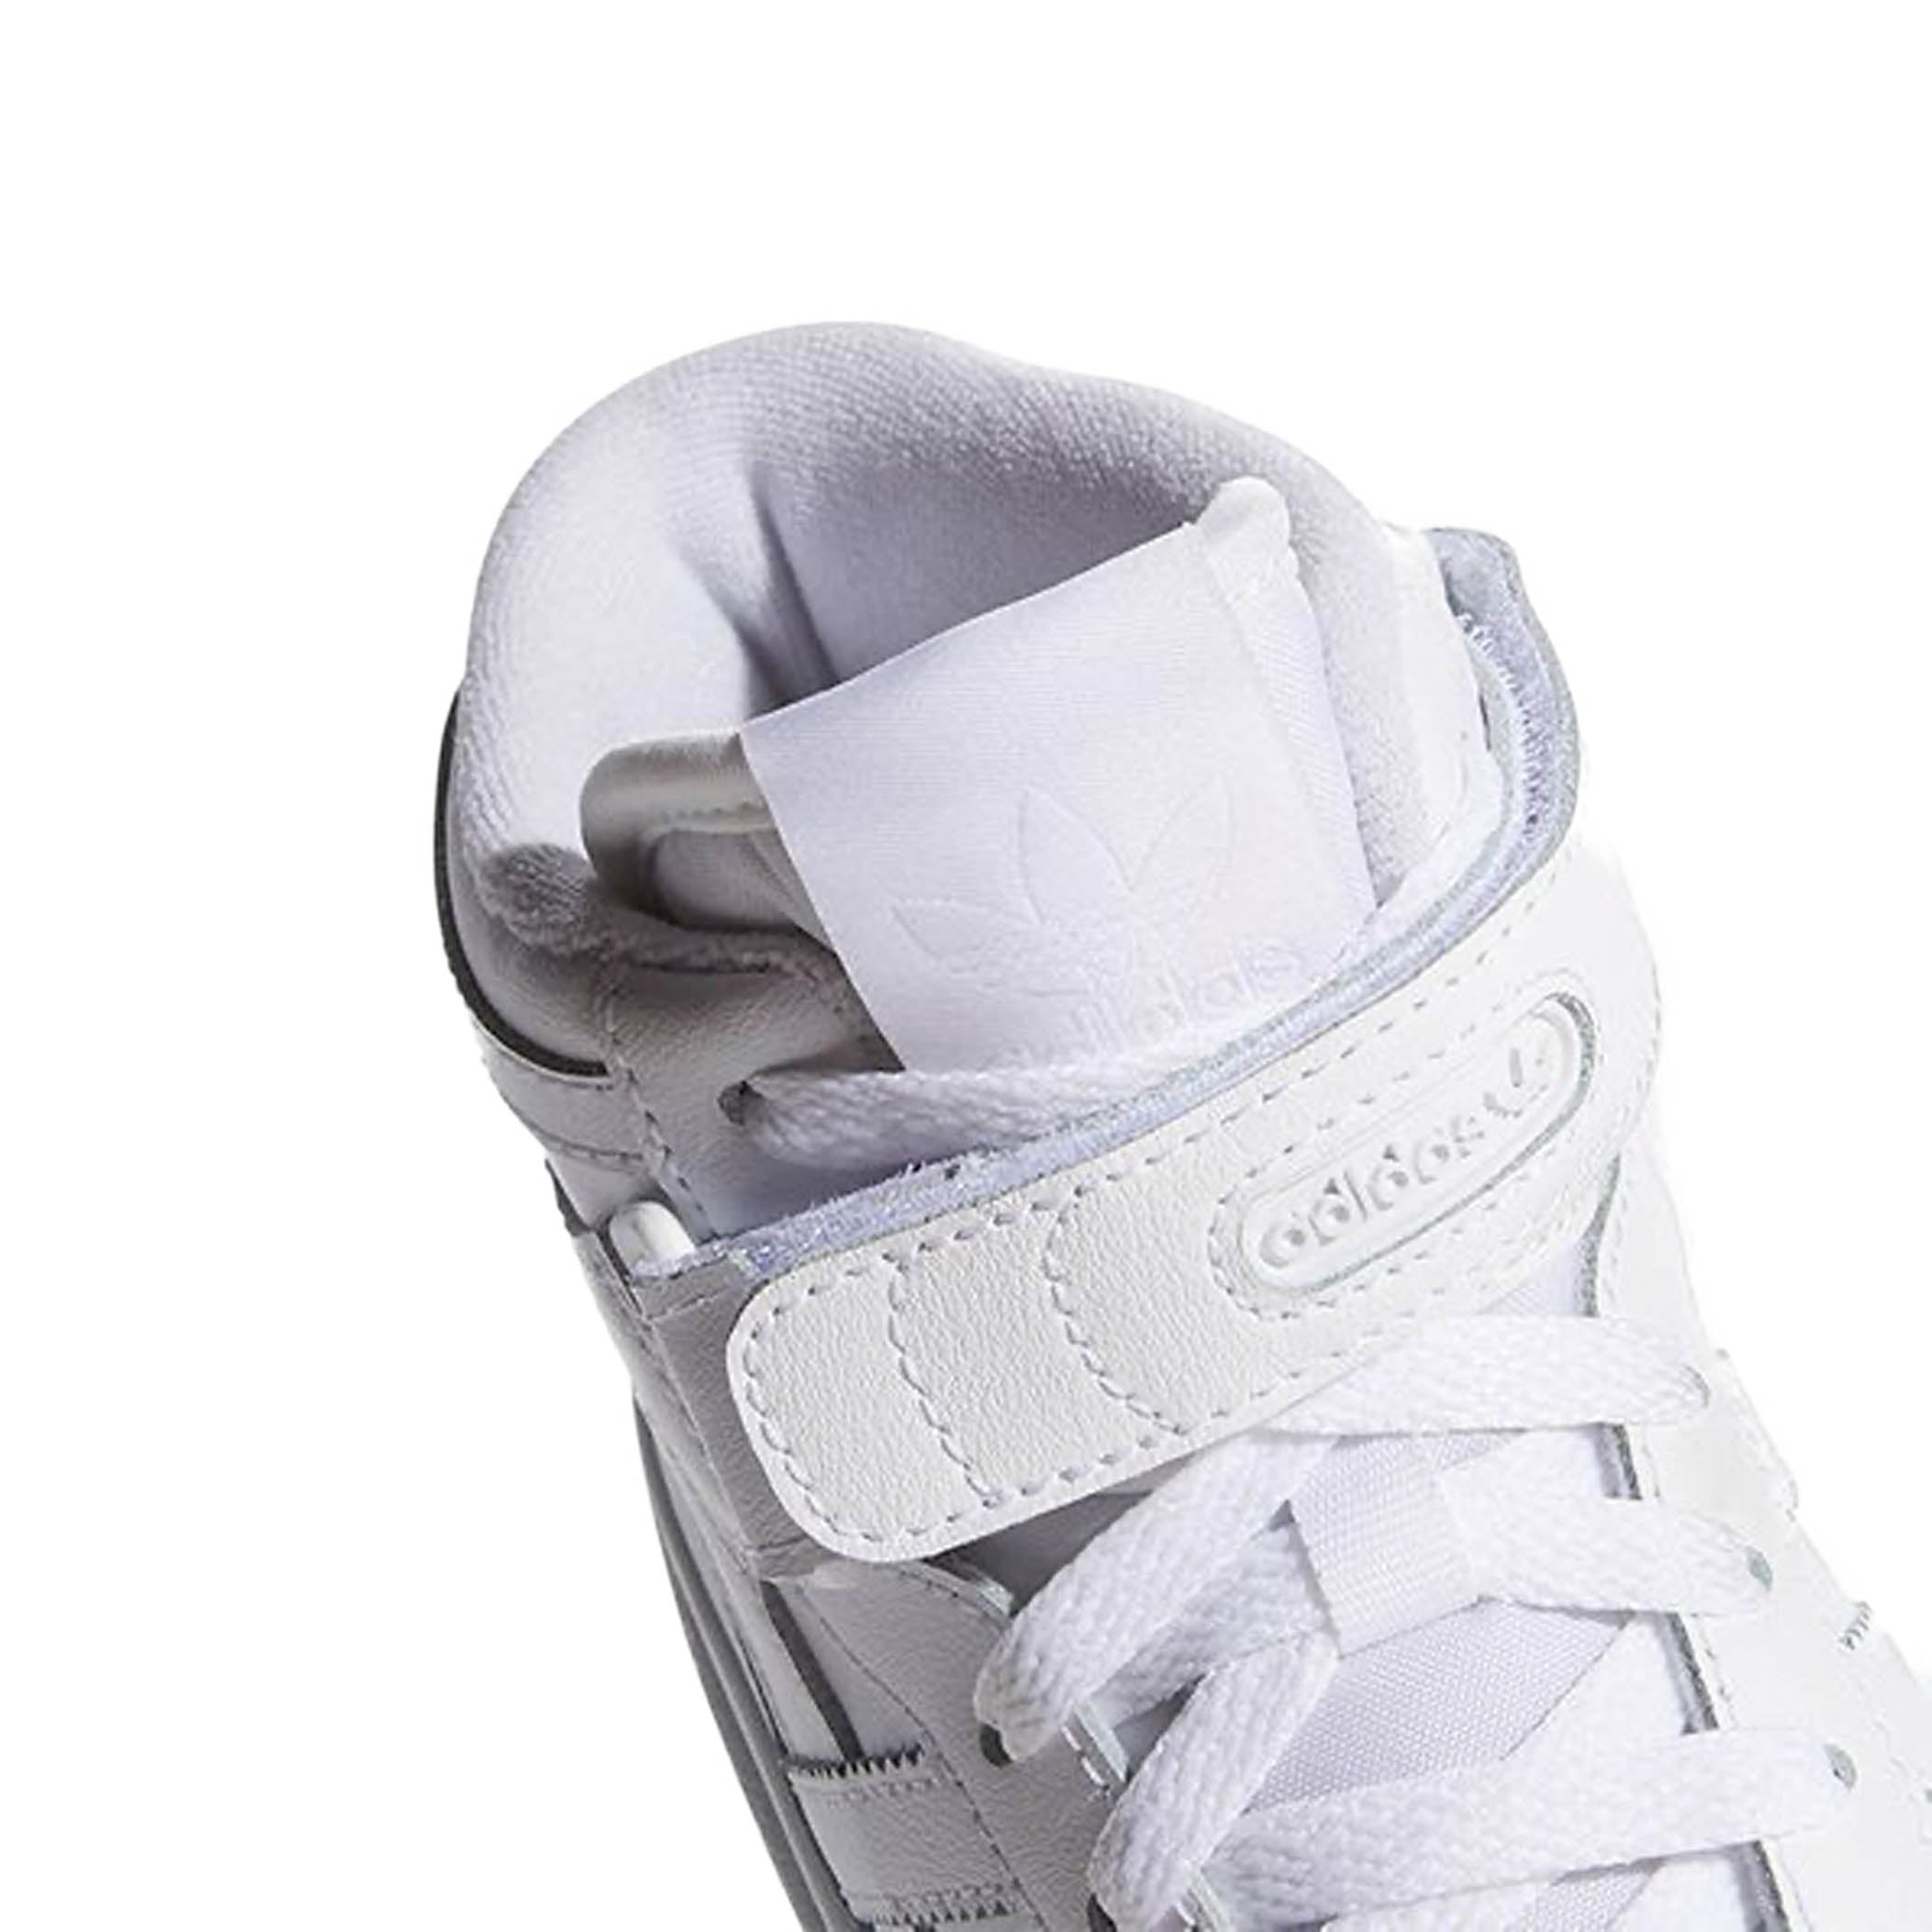 Forum mid white sneakers